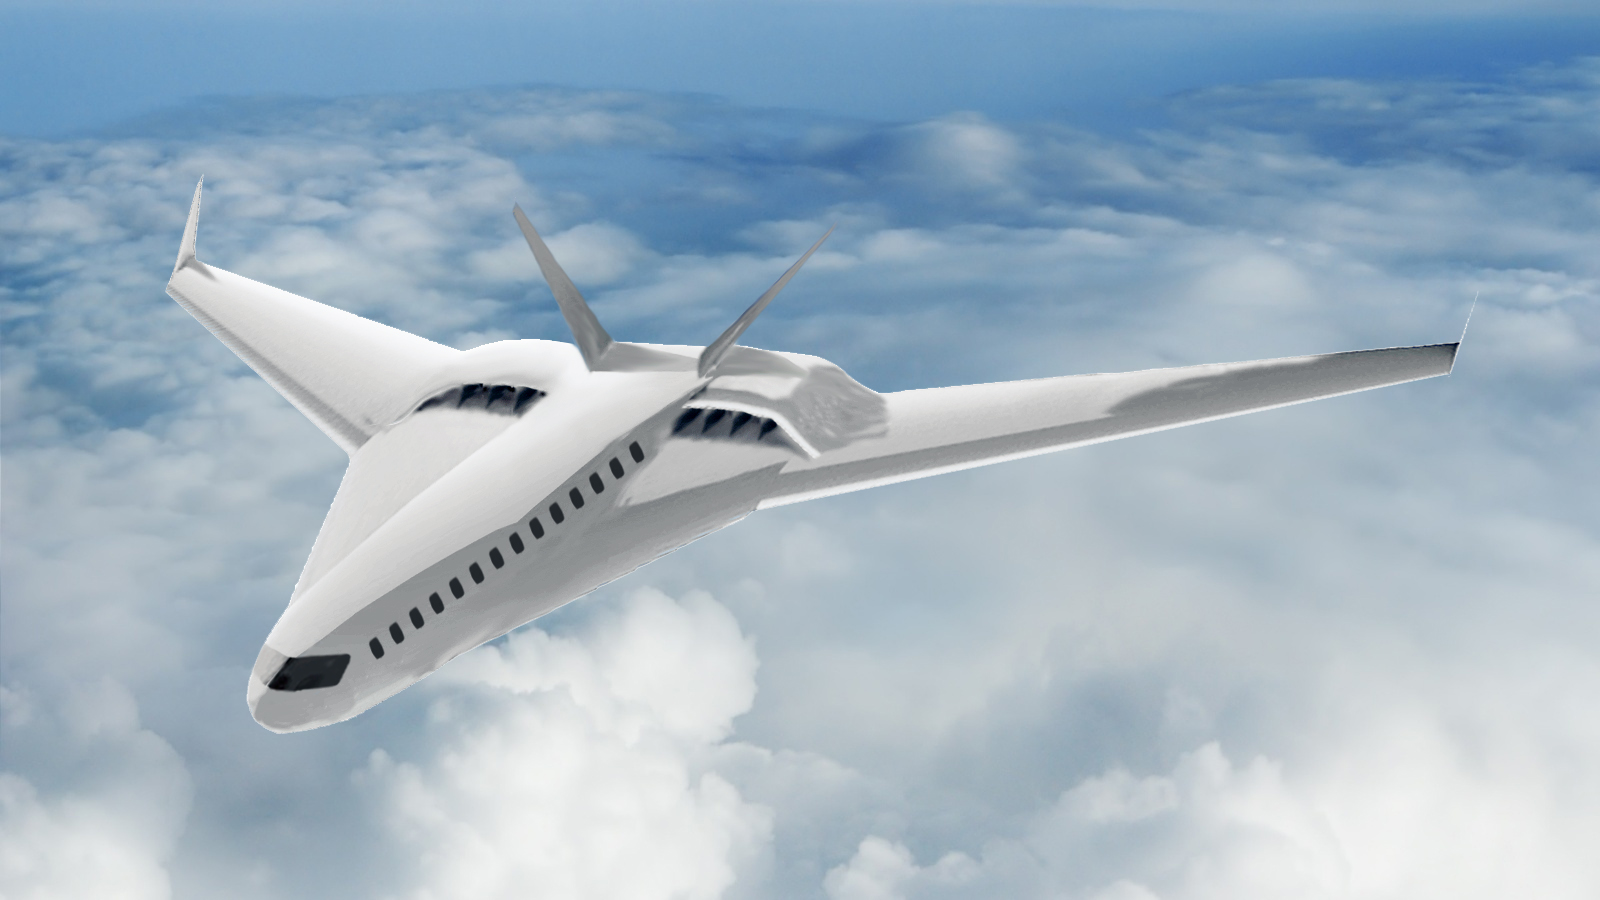 Artist concept of future aircraft in flight.